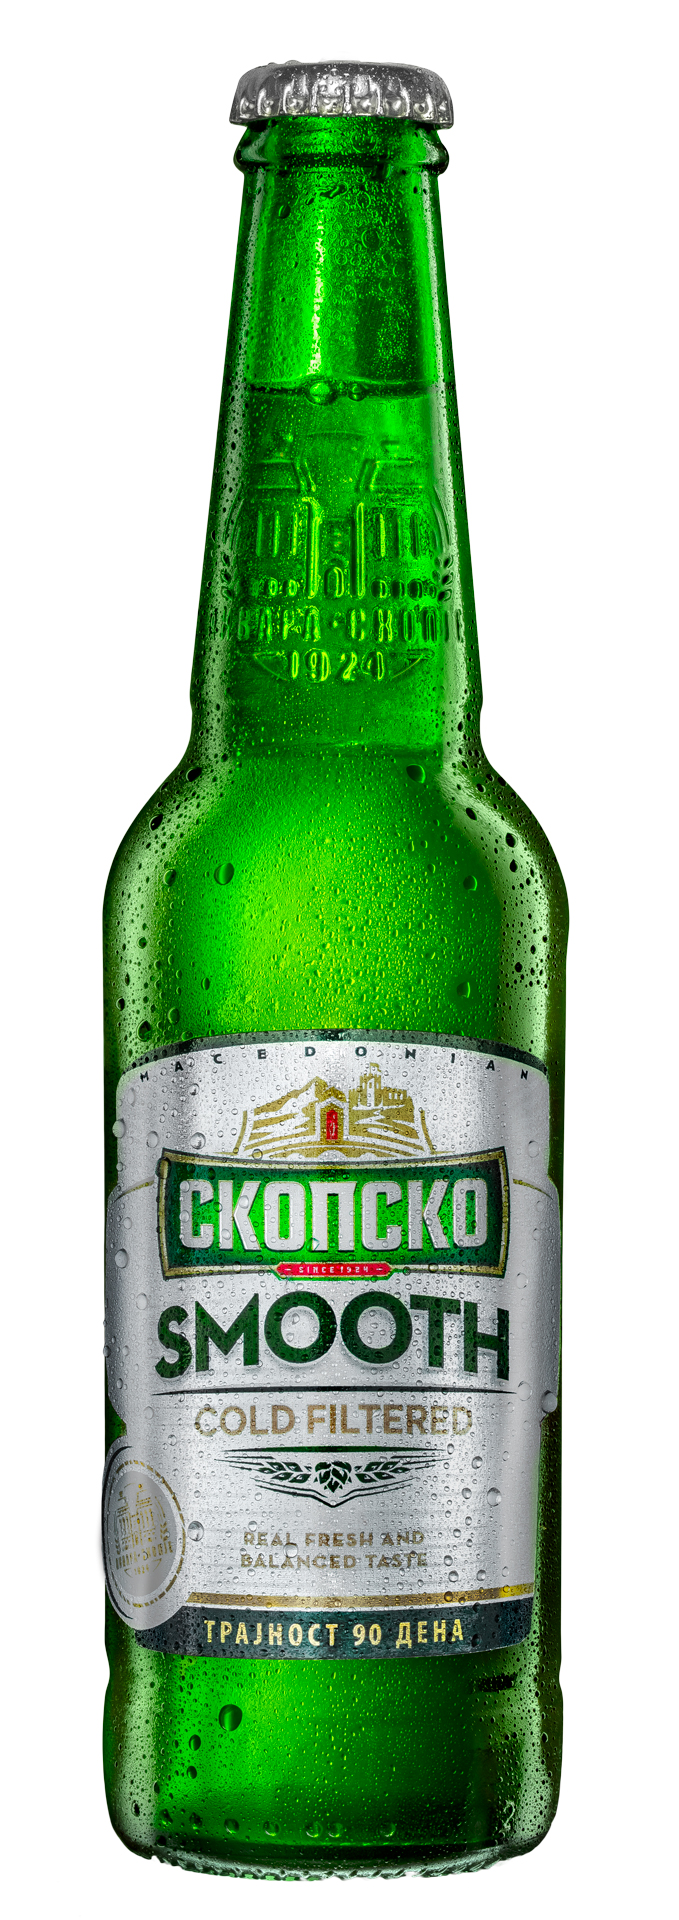 1-pivo-po-tvoe-skopsko-smooth-promovirano-novoto-pivo-na-pivara-skopje-kafepauza.mk